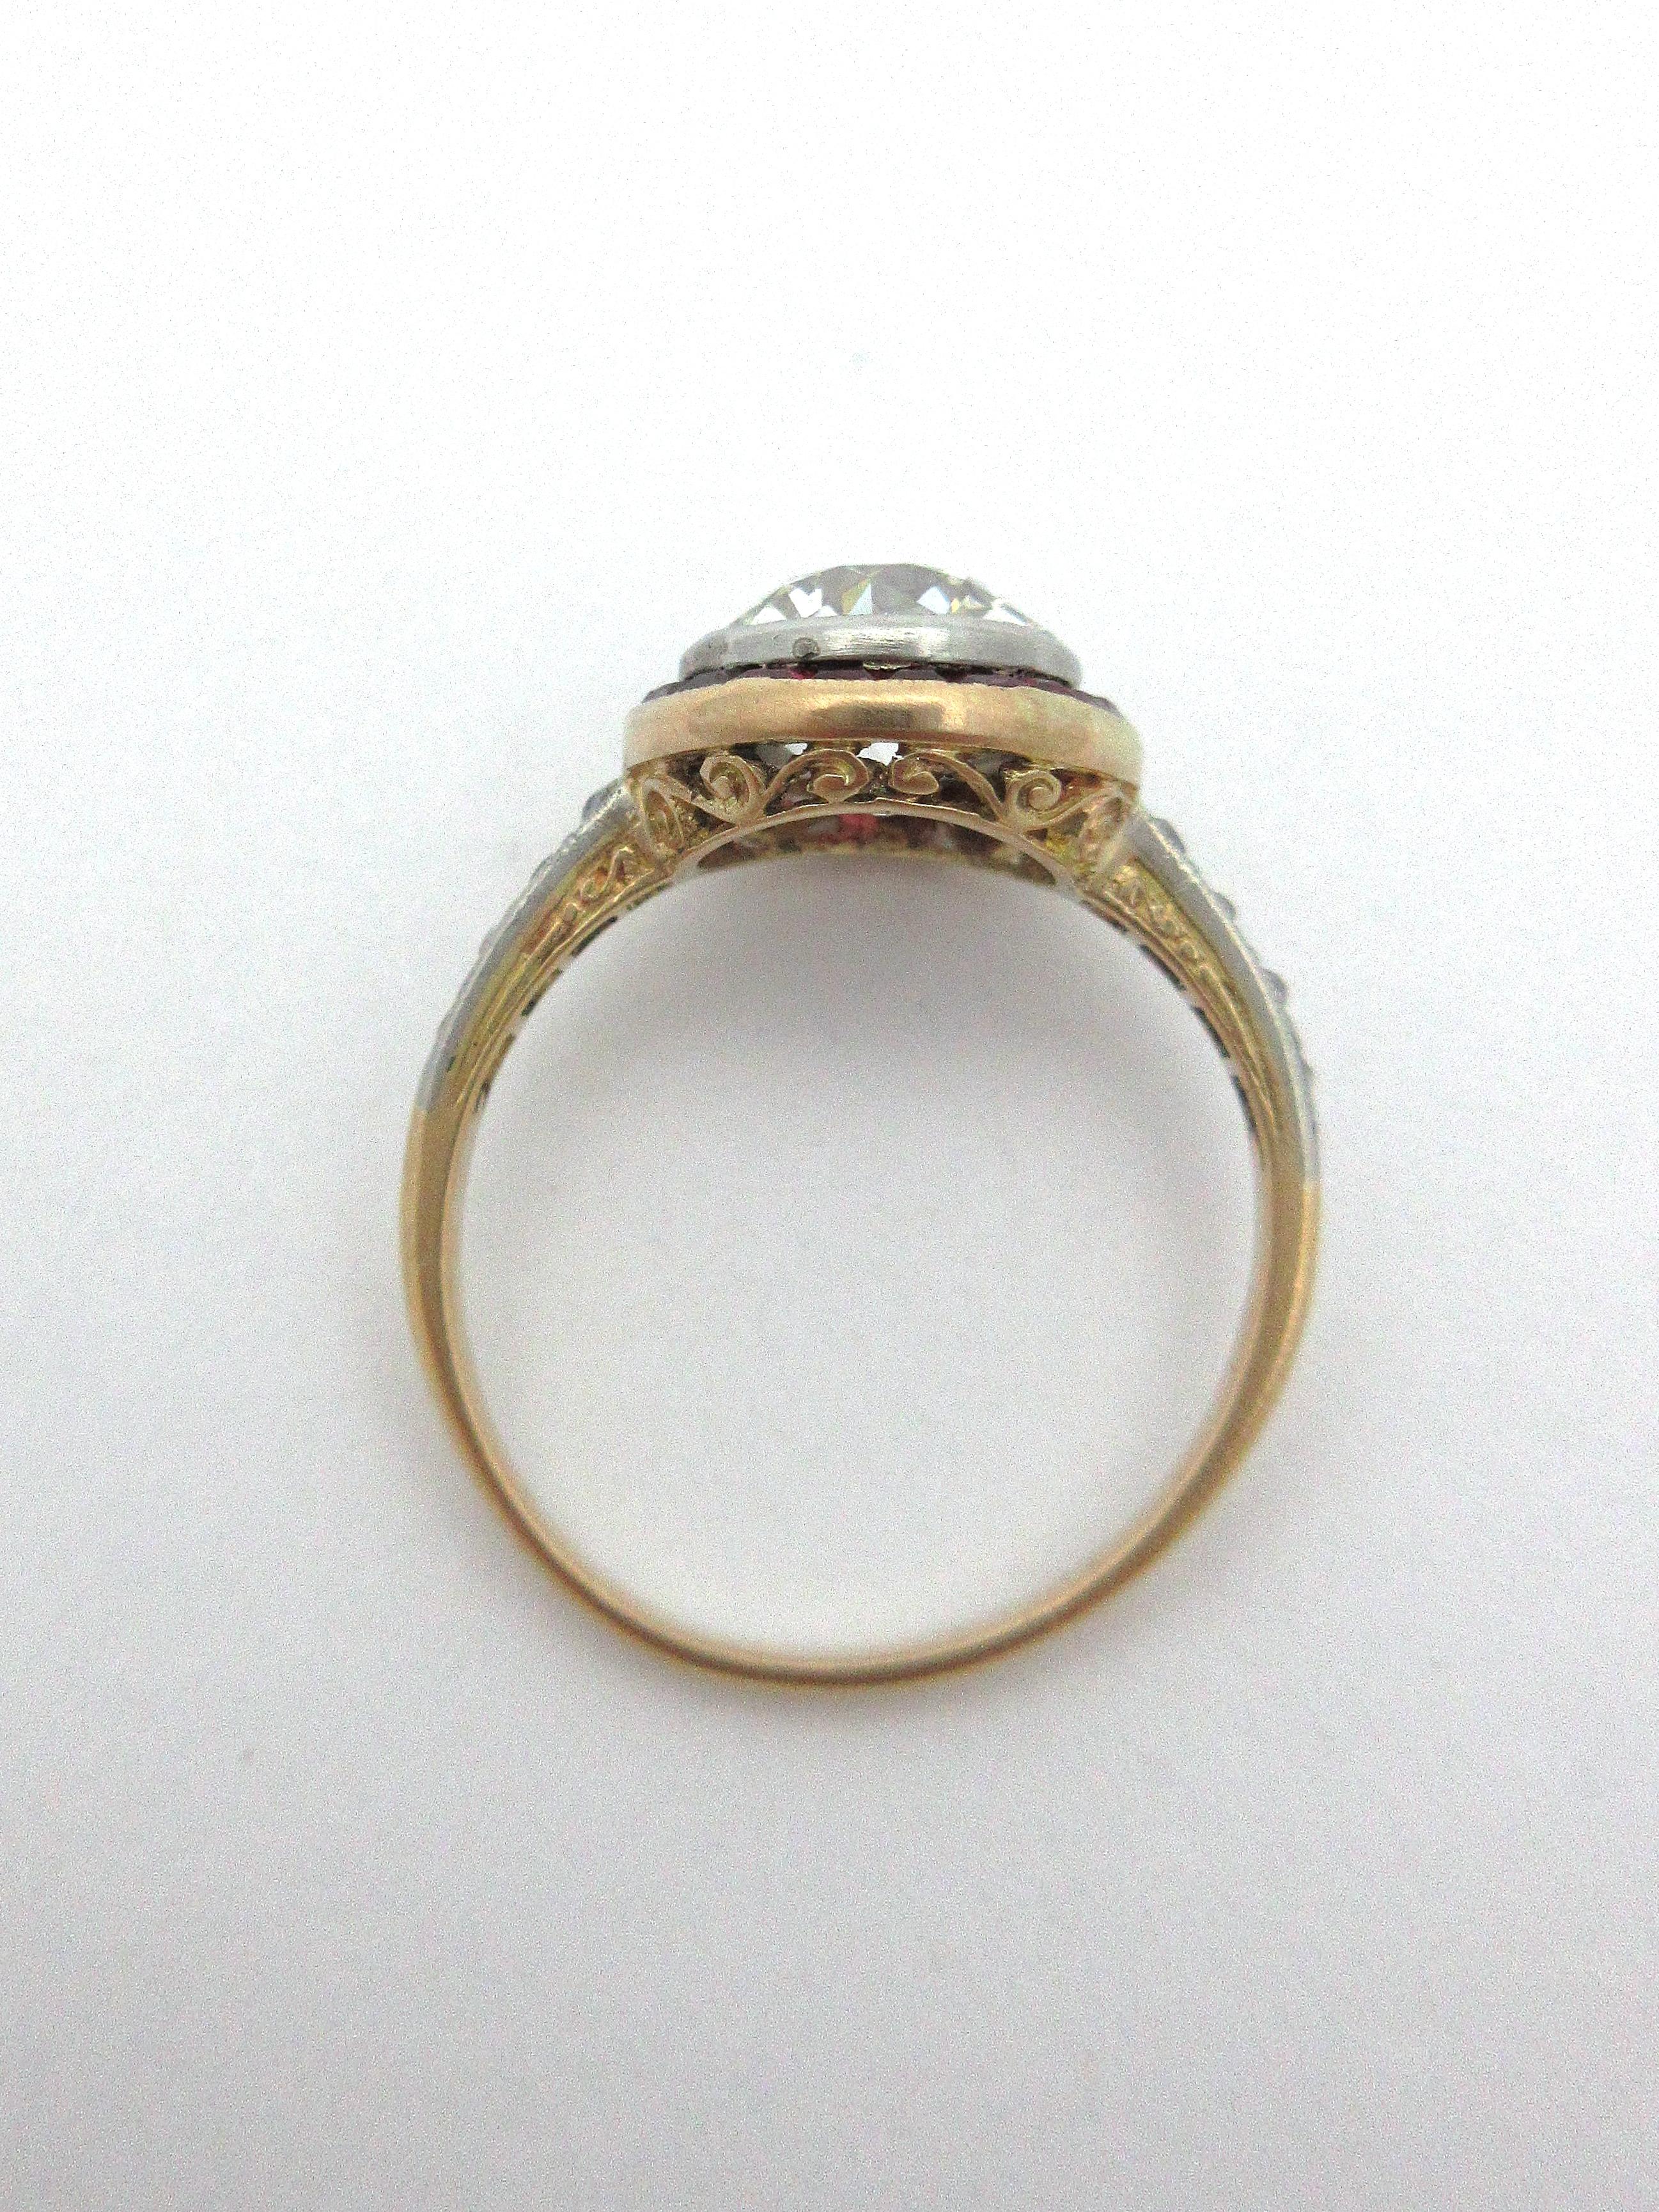 Antique Art Deco European Cut Diamond with Ruby Halo Engagement Ring 18 Karat 1